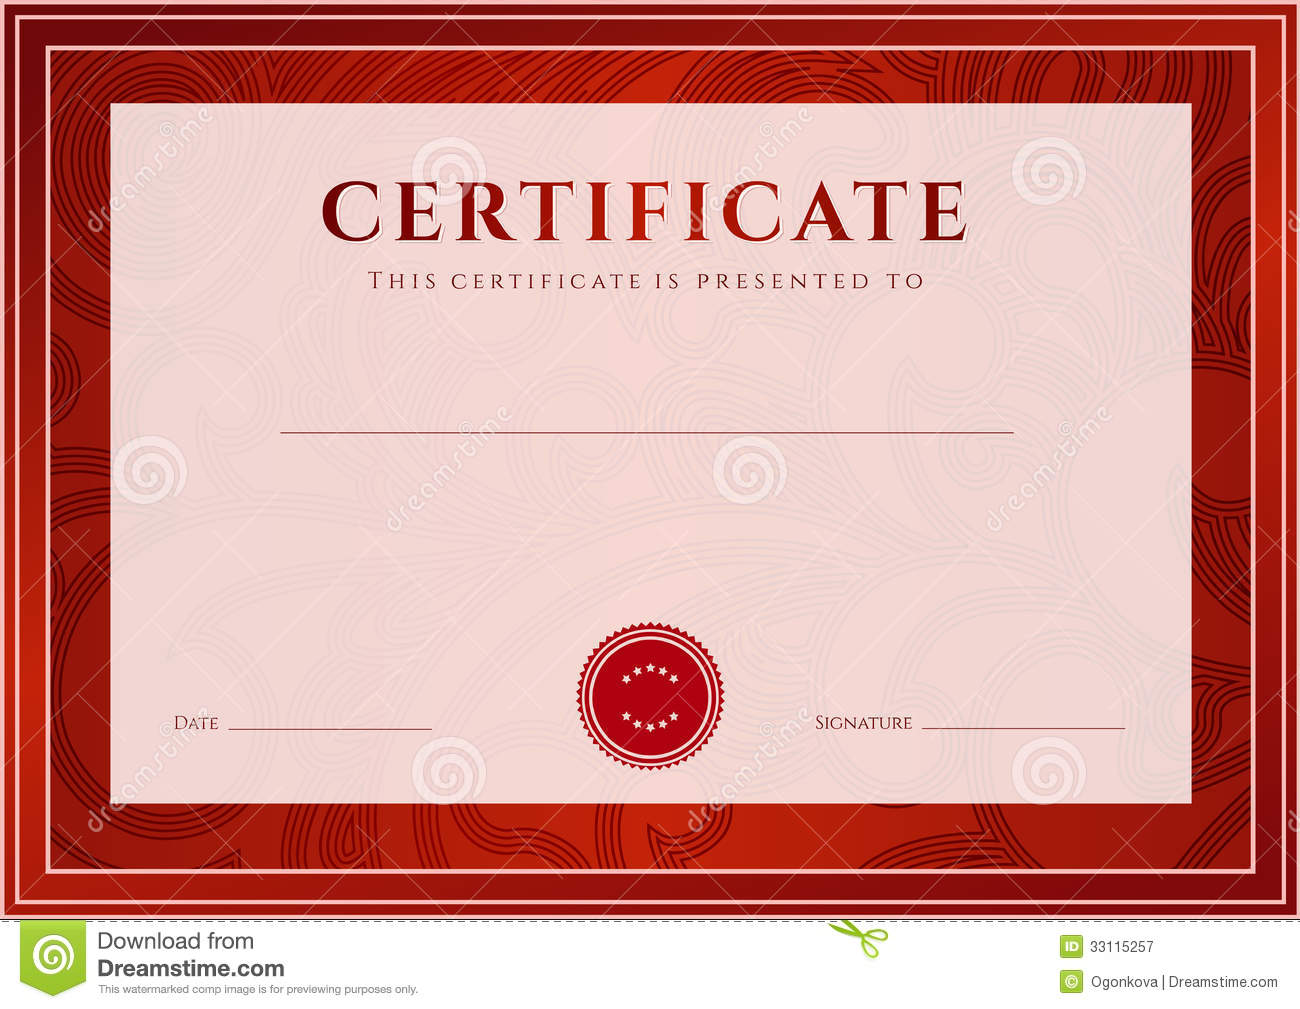 sample-diploma-of-graduation-certificate-templates-new